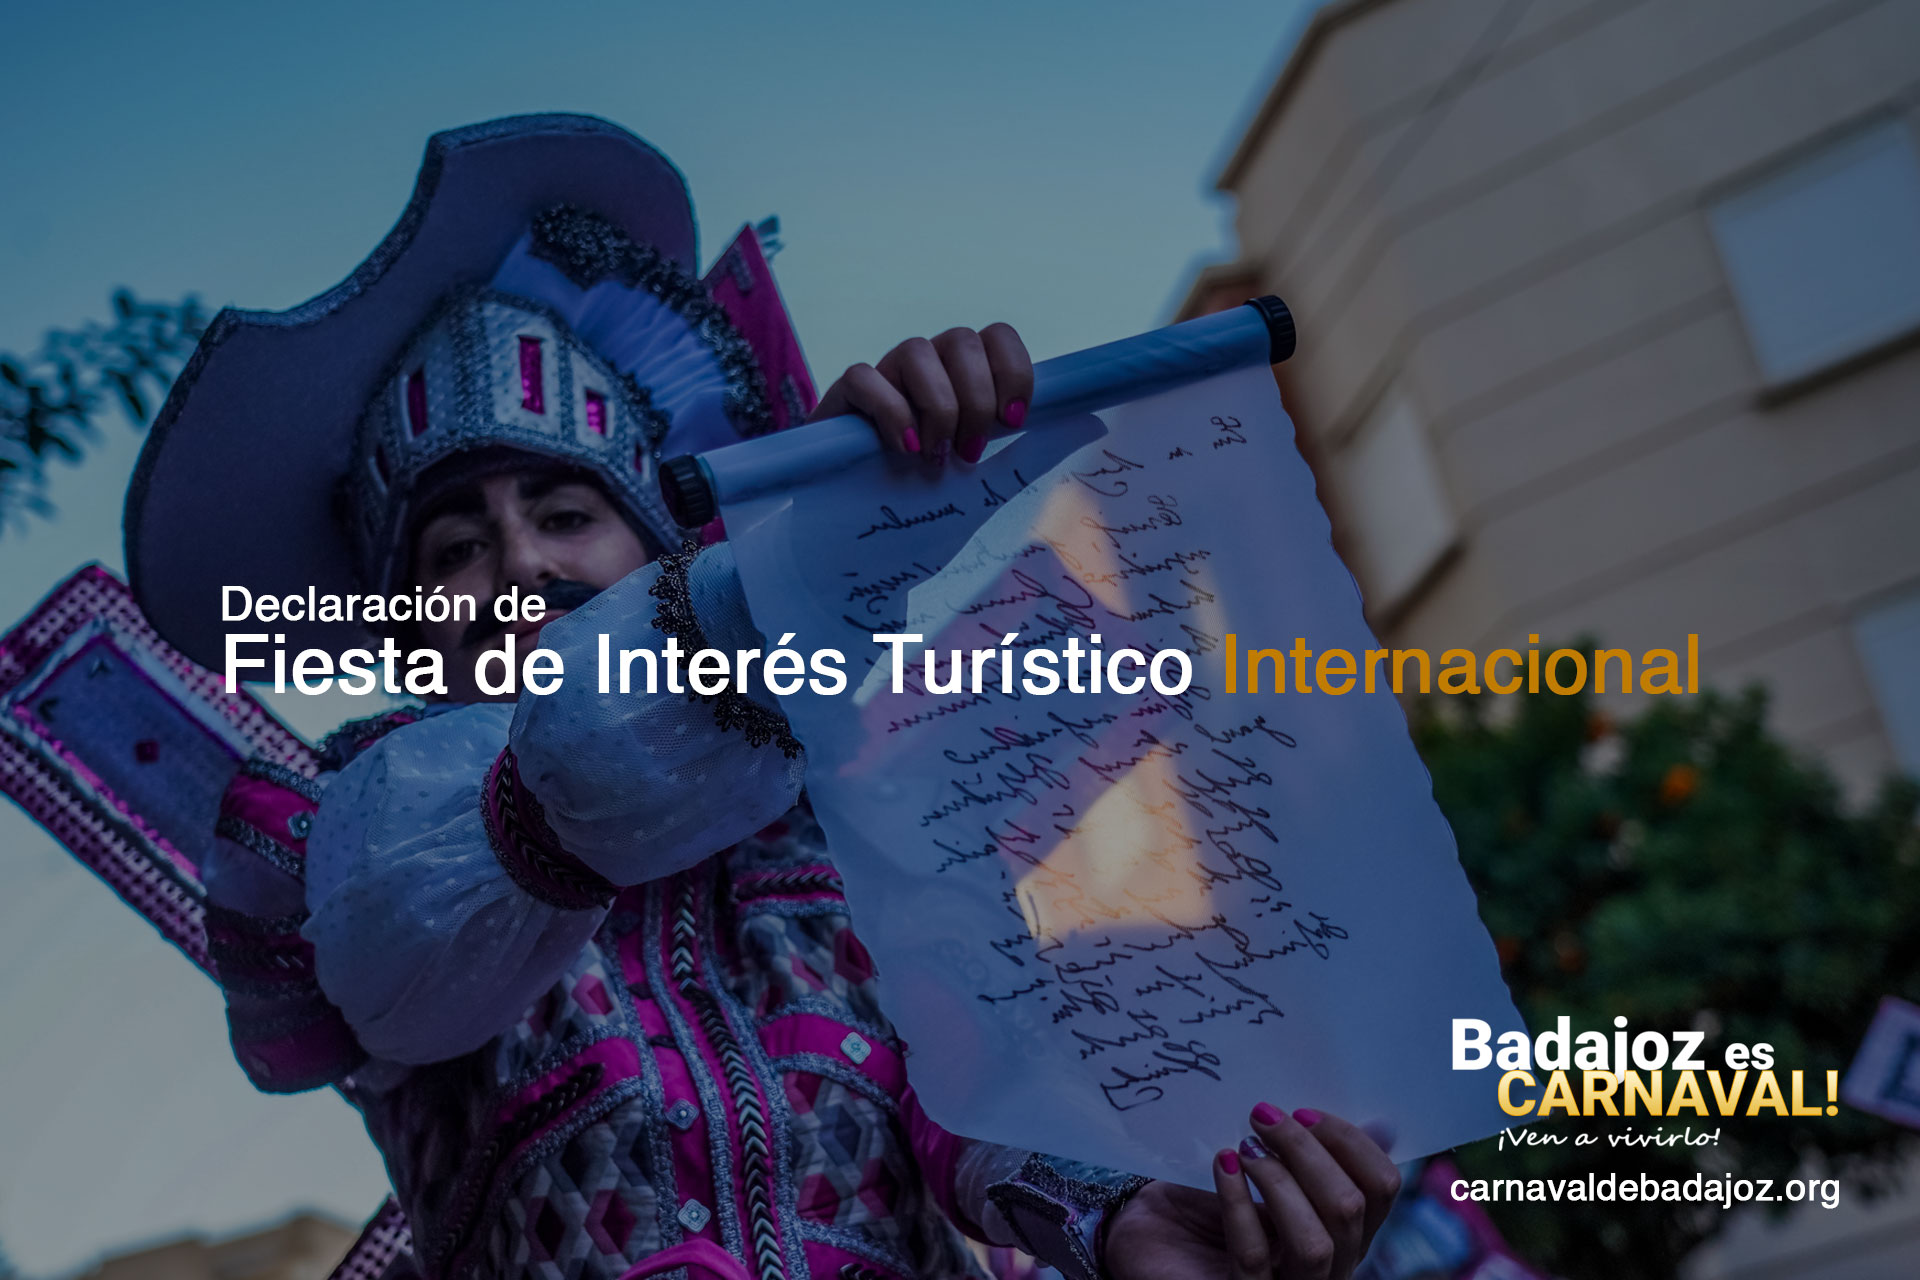 Badajoz Carnival has been declared a Festival of International Tourist Interest